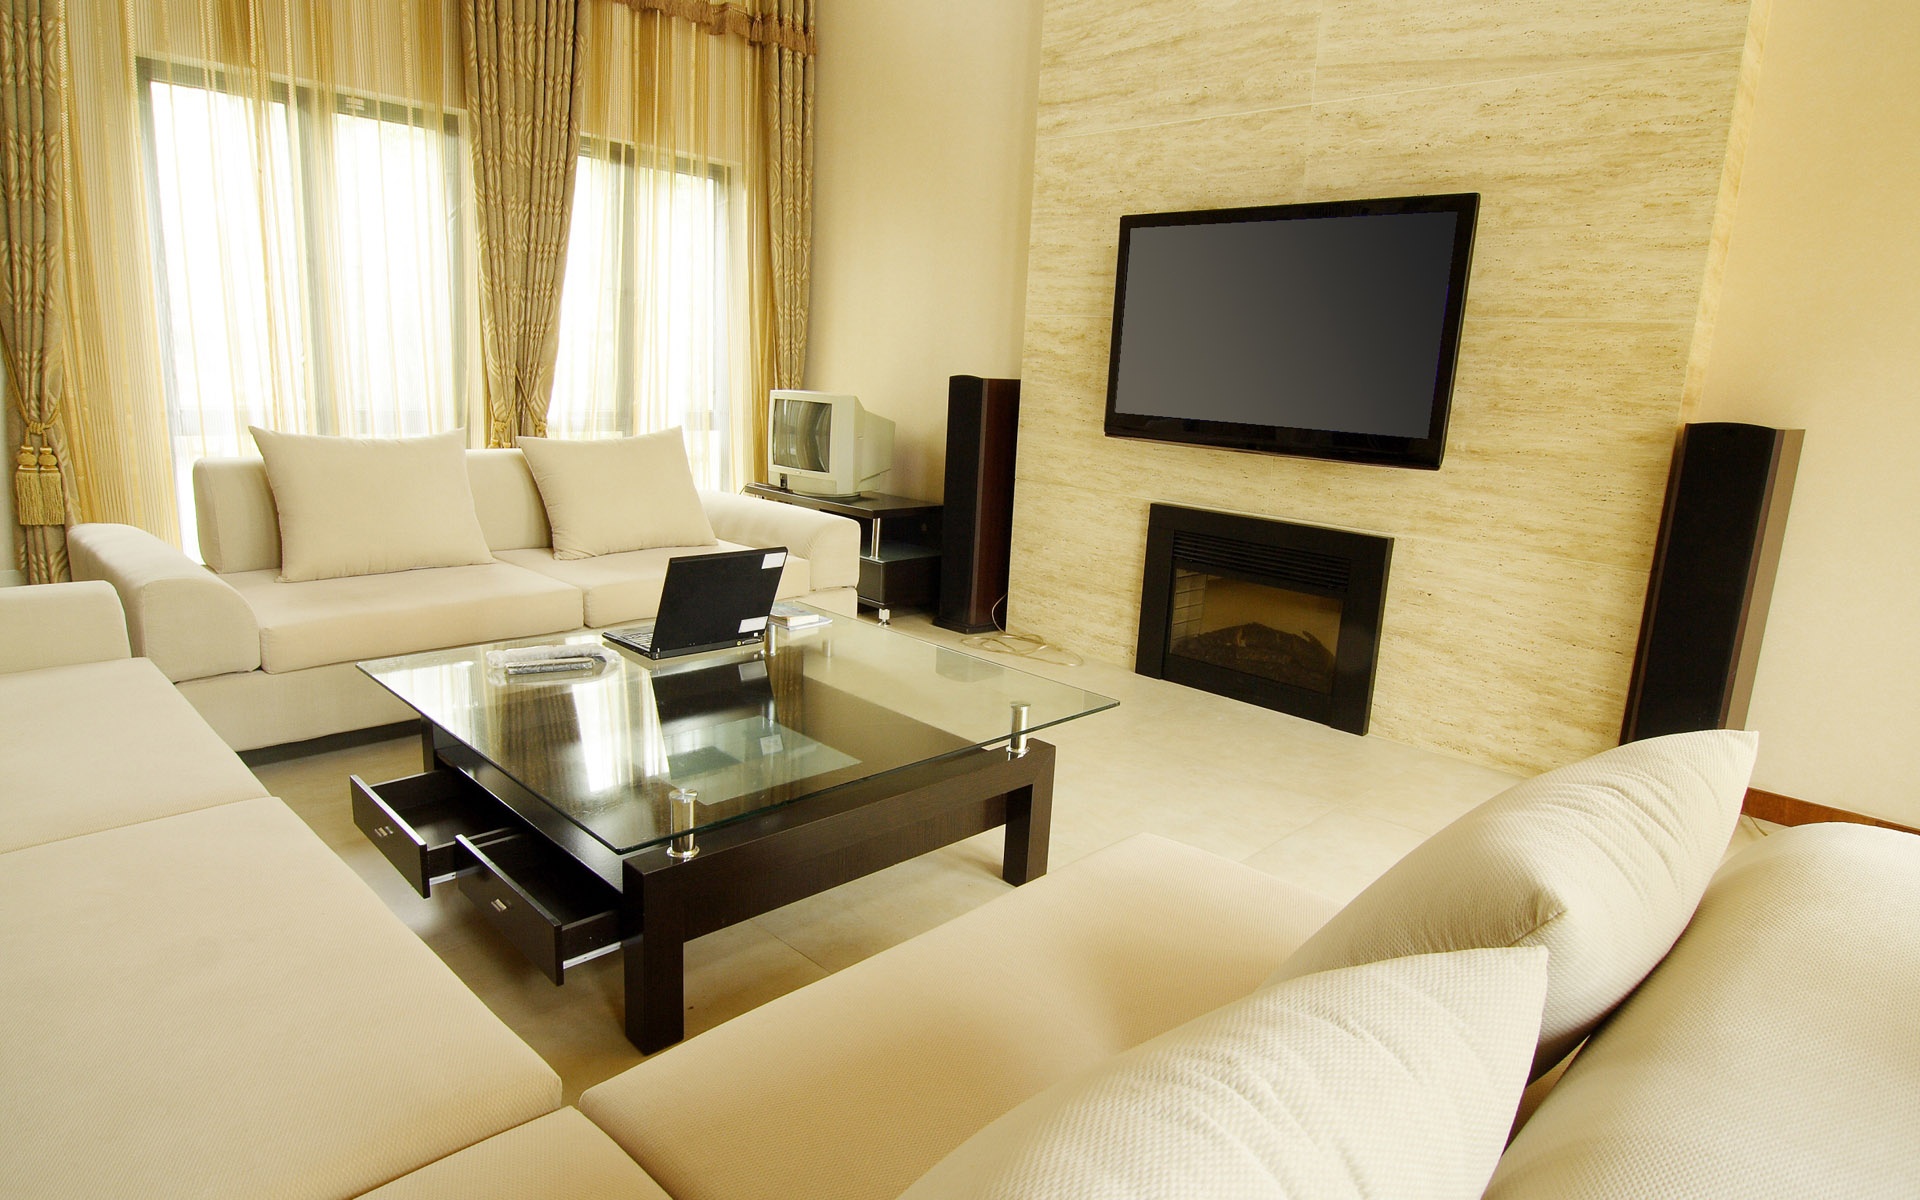 superb-modern-interior-design-living-room-ideas-with-free-decoration